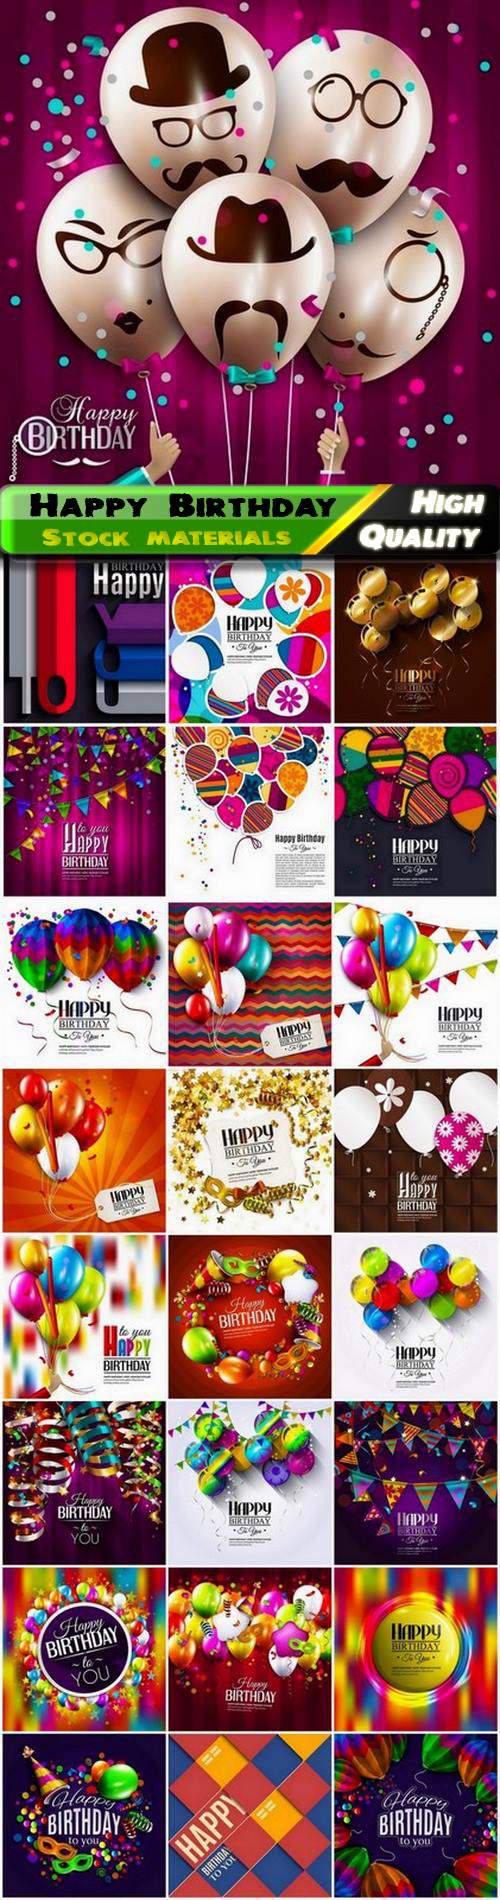 Happy Birthday holiday card with balloon flag confetti - 25 Eps